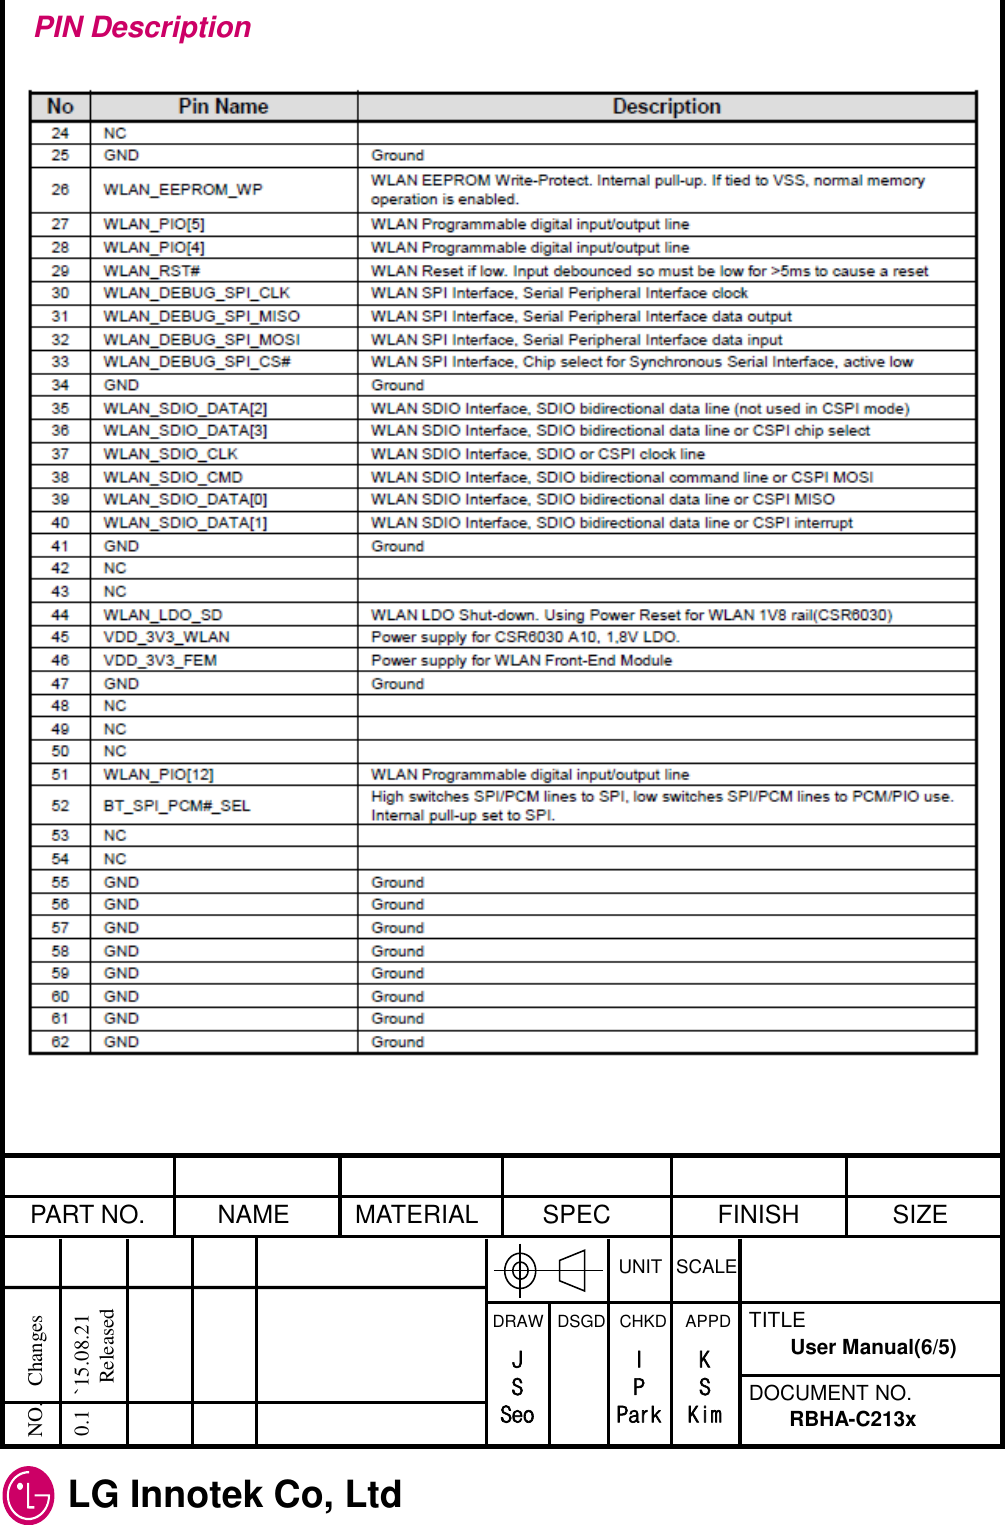  LG Innotek Co, Ltd   PART NO.  NAME  MATERIAL  SPEC  FINISH  SIZE UNIT  SCALE DRAW   DSGD   CHKD    APPD  TITLE DOCUMENT NO. NO.   Changes     0.1   `15.08.21               Released RBHA-C213x User Manual(6/5) J S Seo I P Park K S Kim PIN Description 